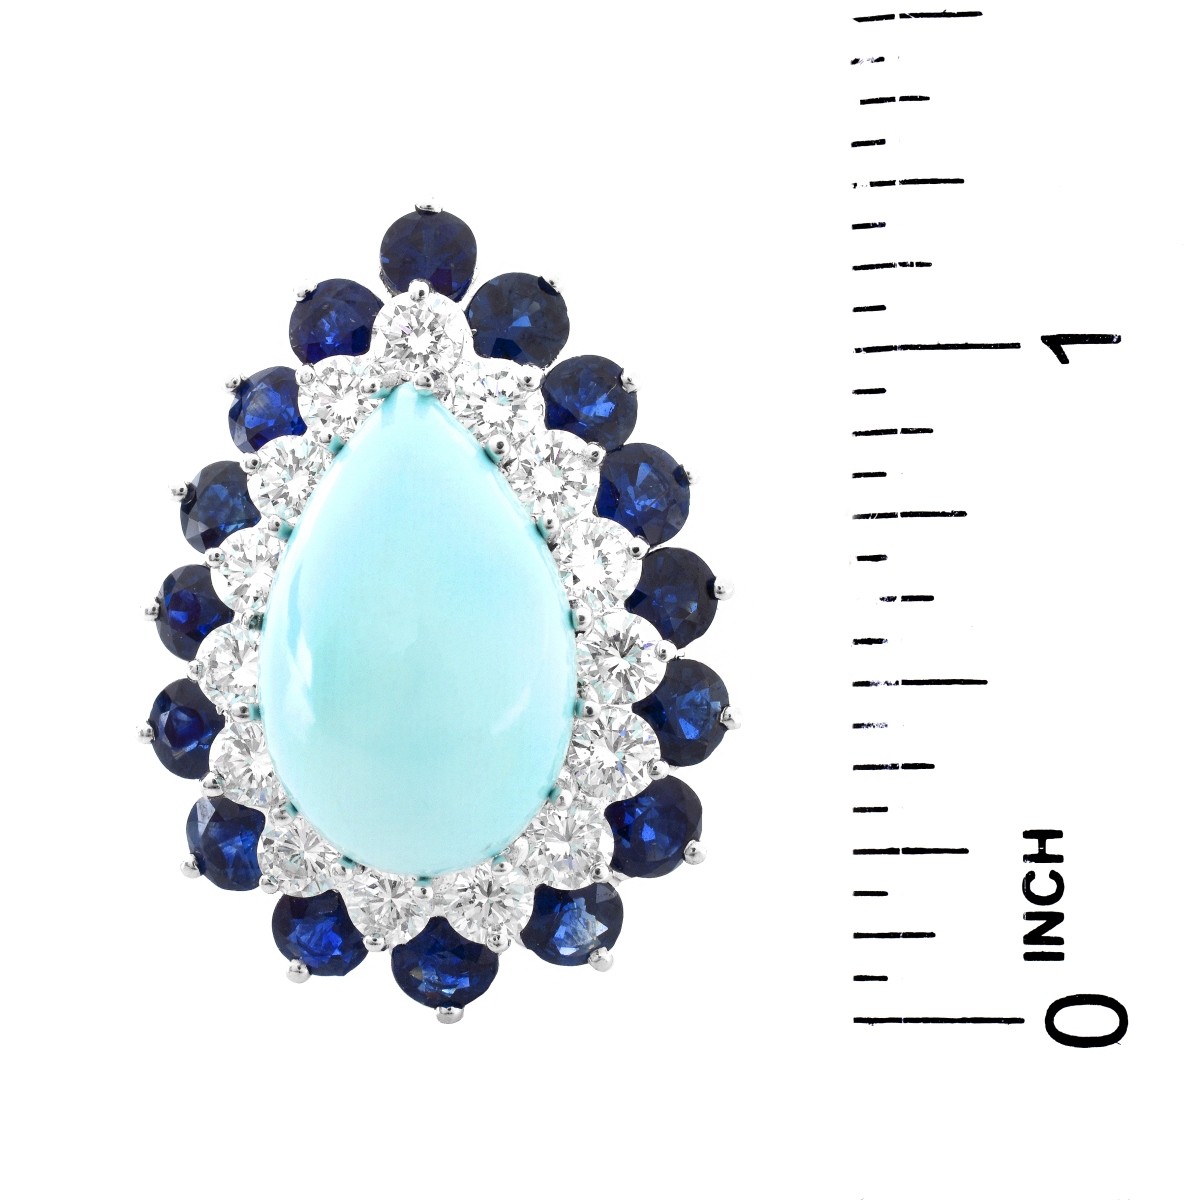 Diamond, Sapphire, Turquoise Ring